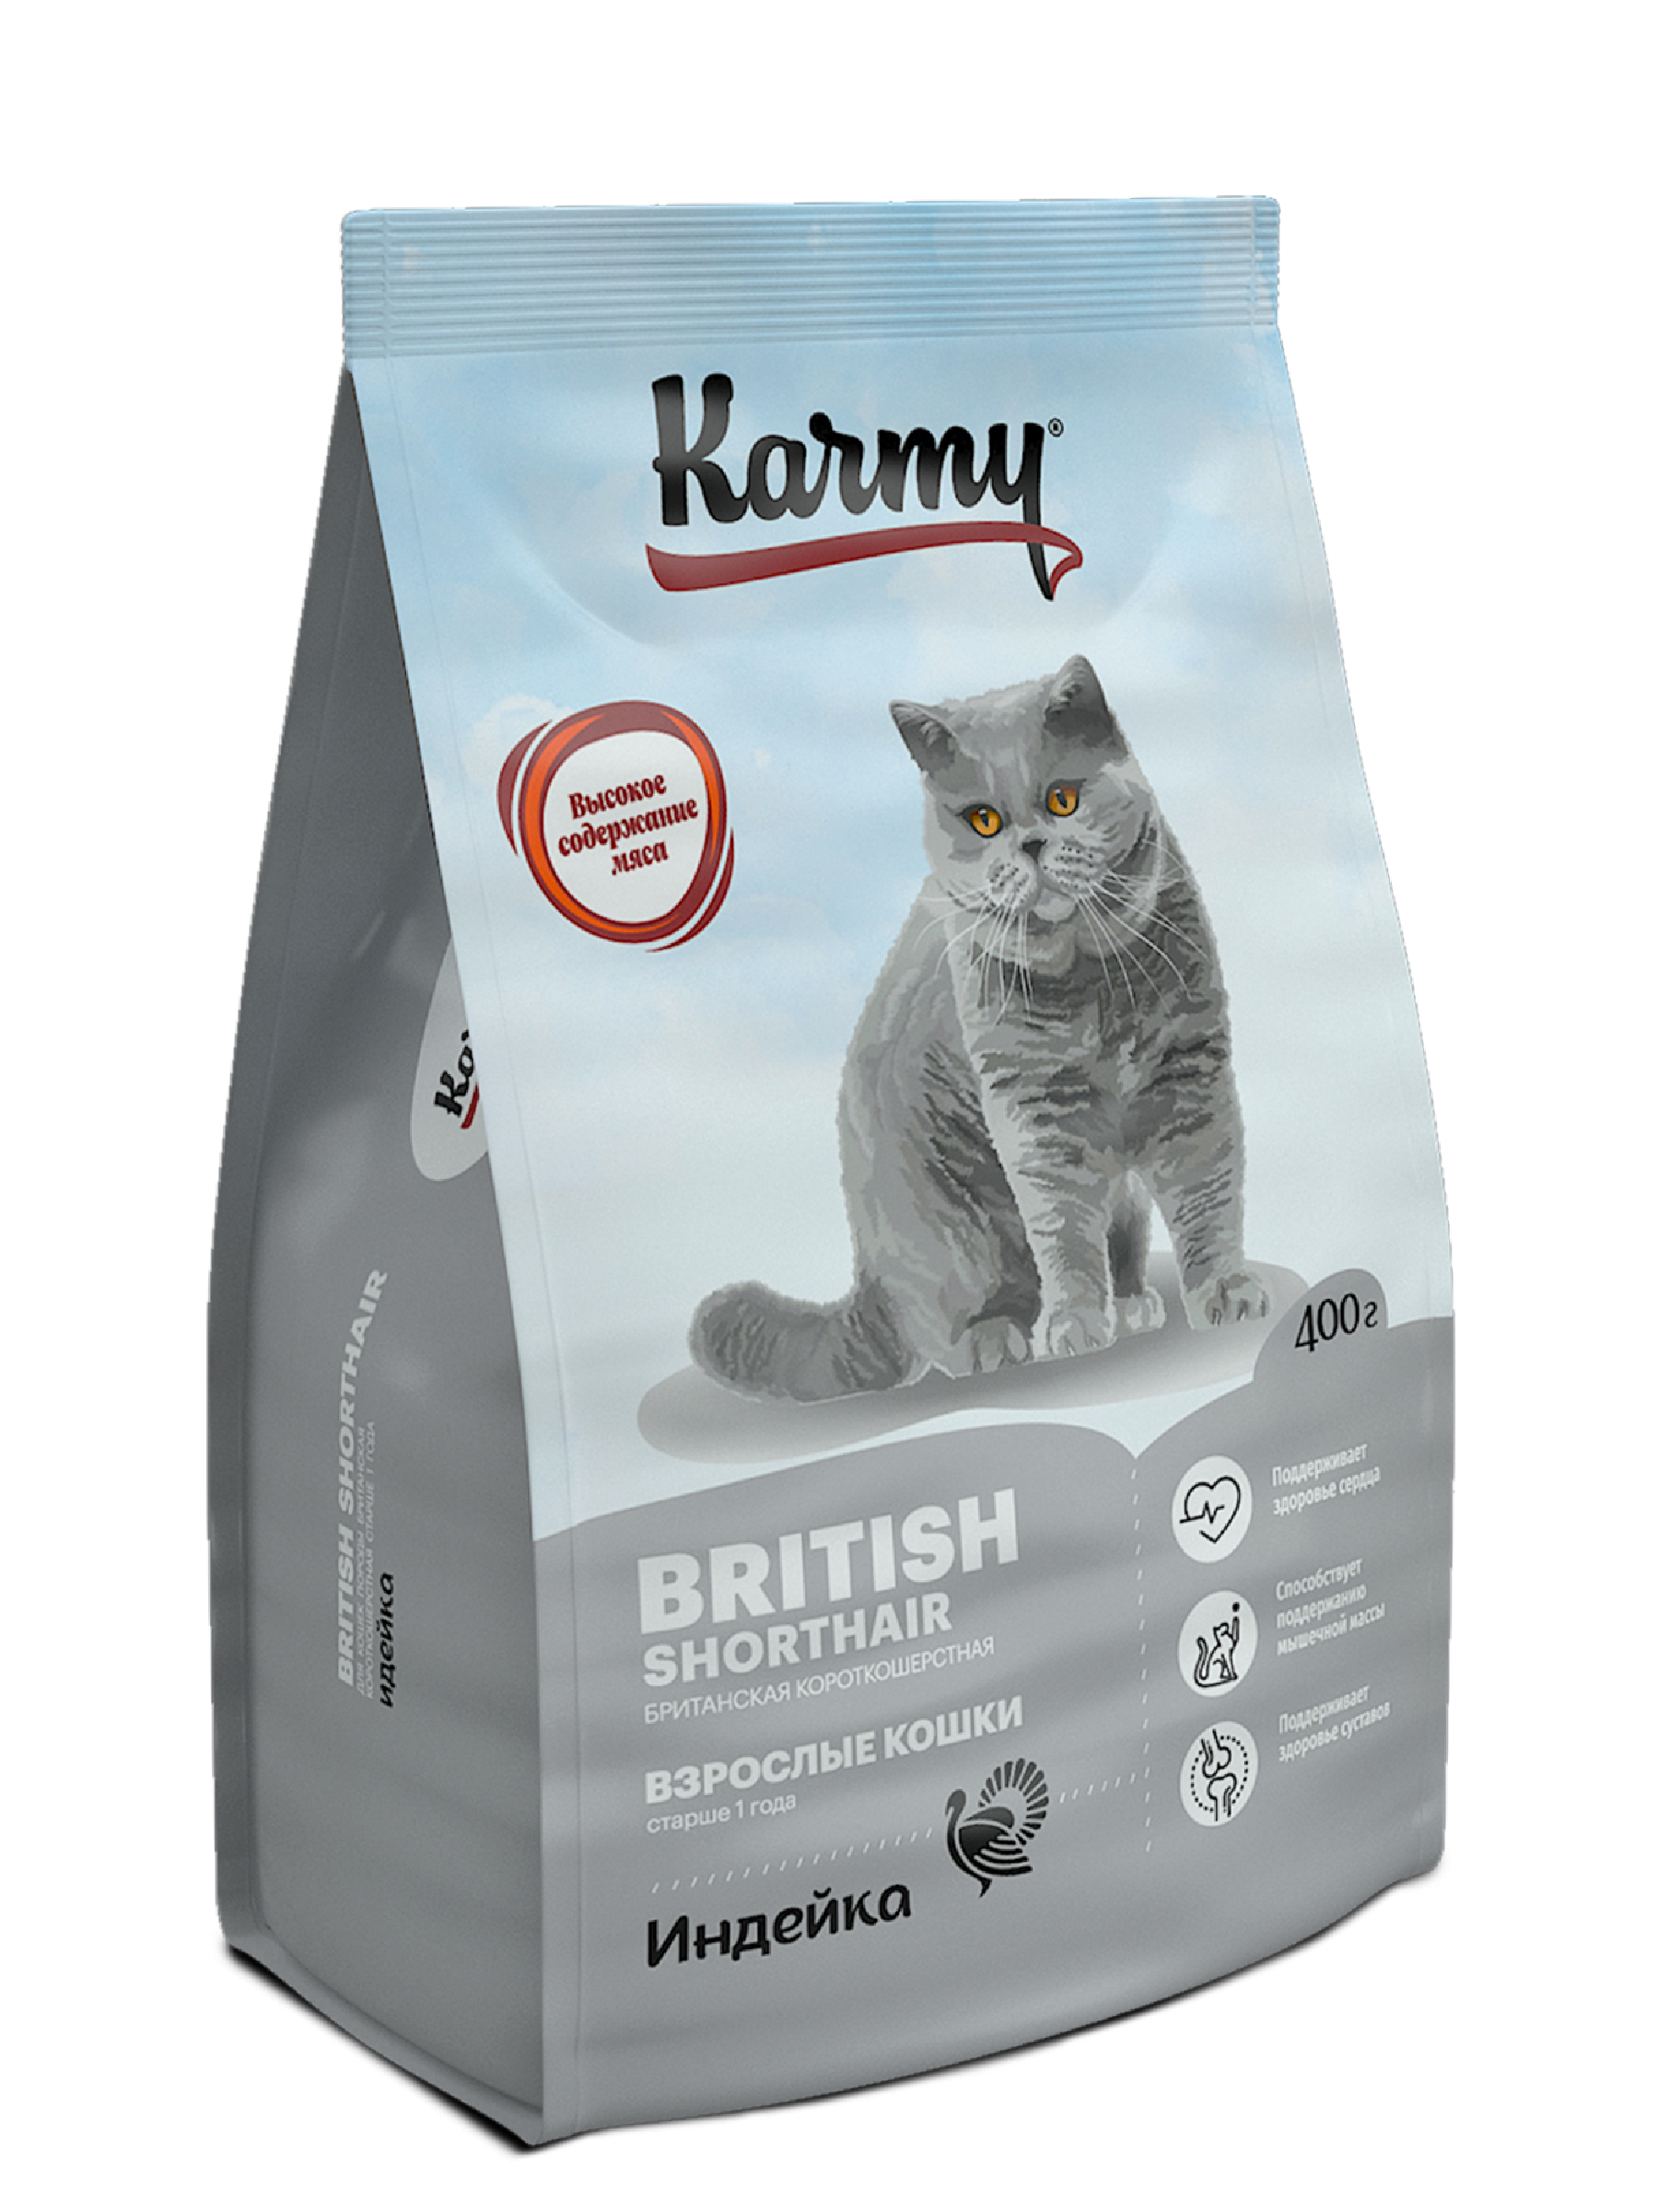 фото Сухой корм для кошек karmy british shorthair, британская, индейка, 0,4кг